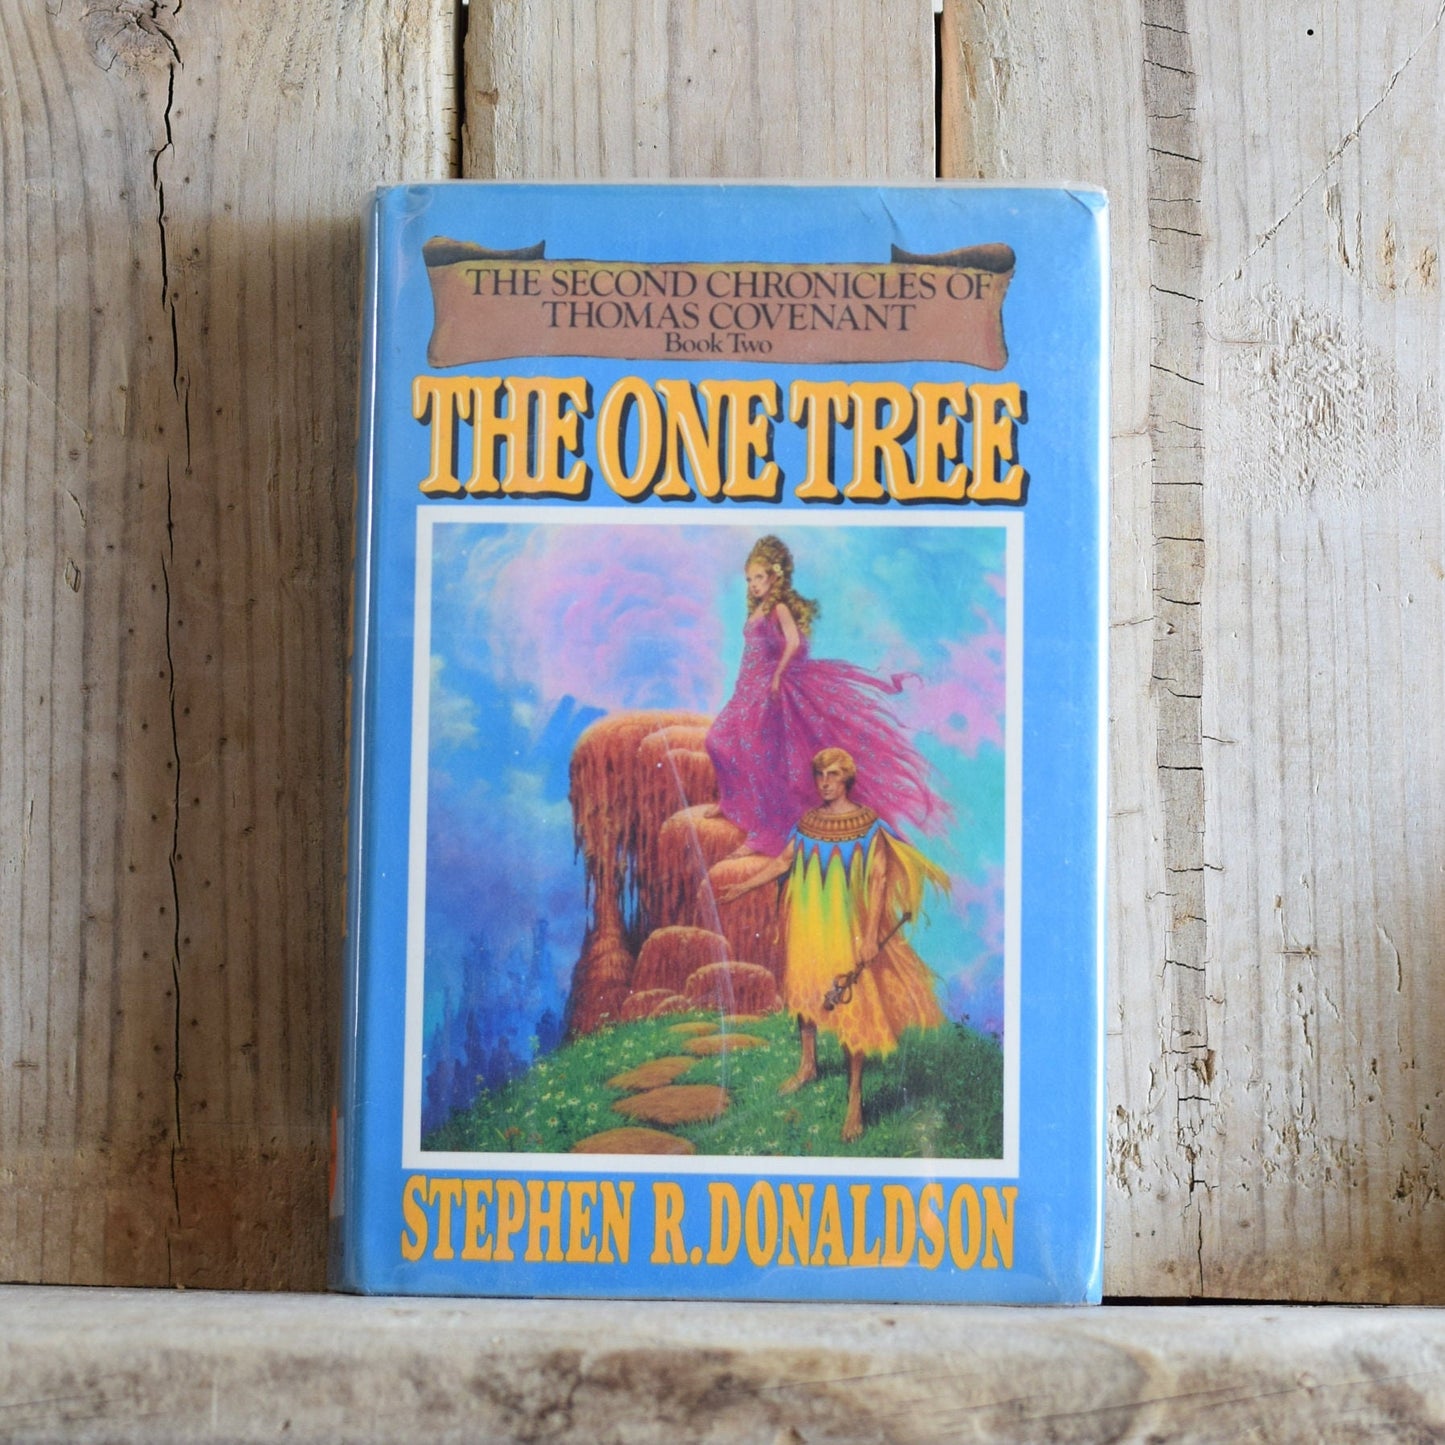 Vintage Sci-fi Hardback Novel: Stephen R Donaldson - The One Tree SIGNED FIRST EDITION